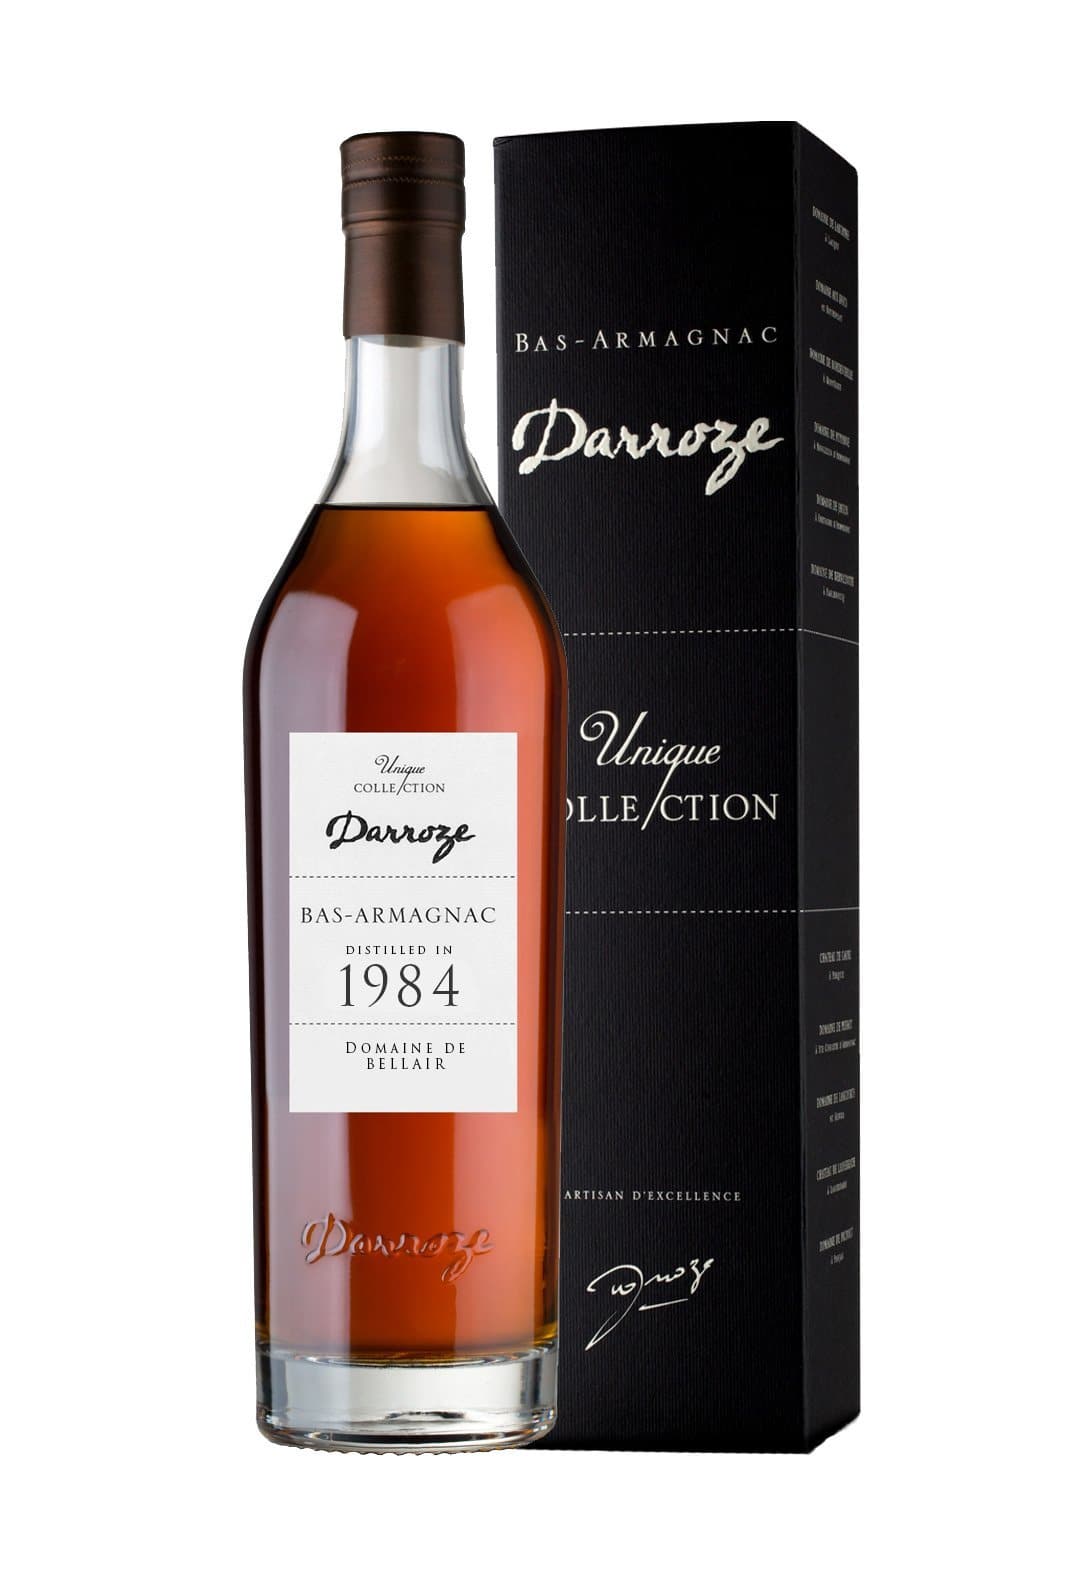 Darroze 1984 Bellair Grand Bas Armagnac 48% 700ml | Brandy | Shop online at Spirits of France